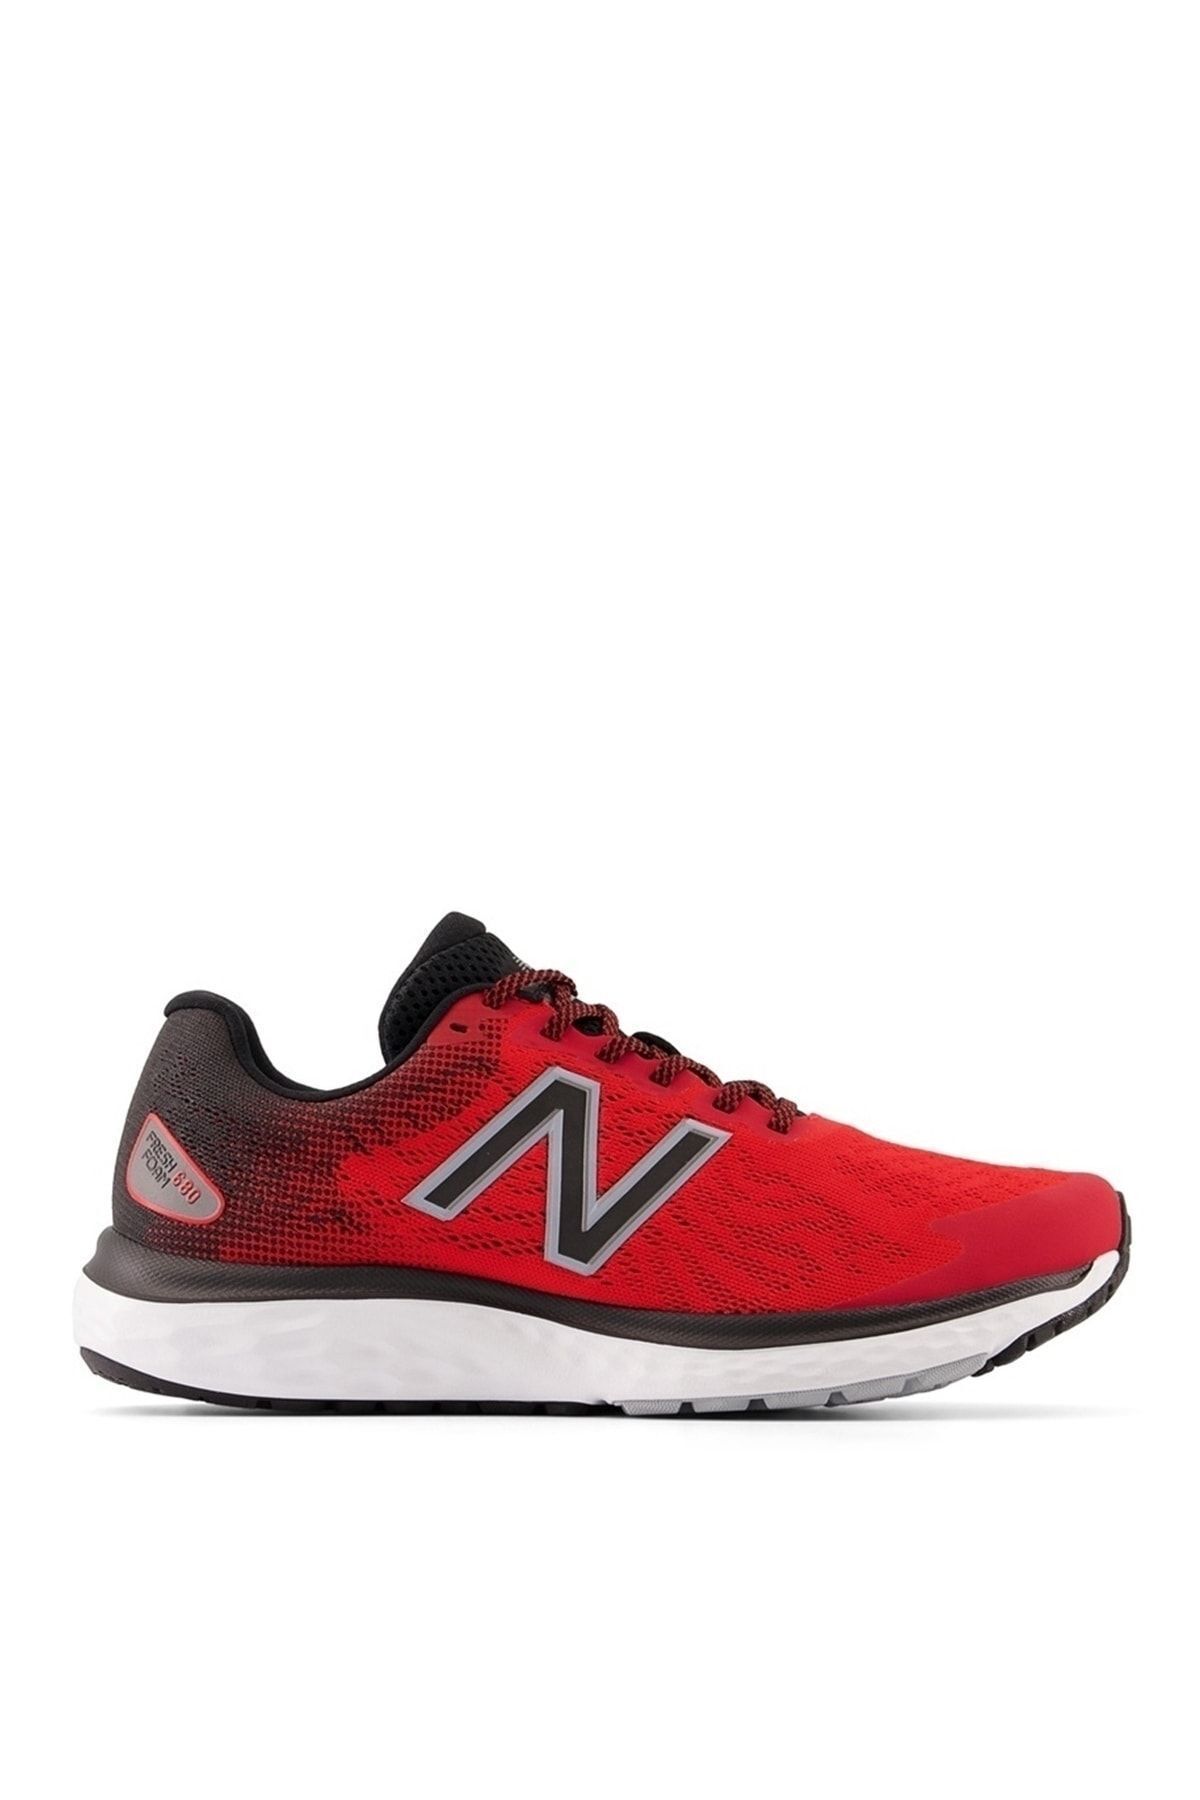 New Balance Nb Running Men Shoes